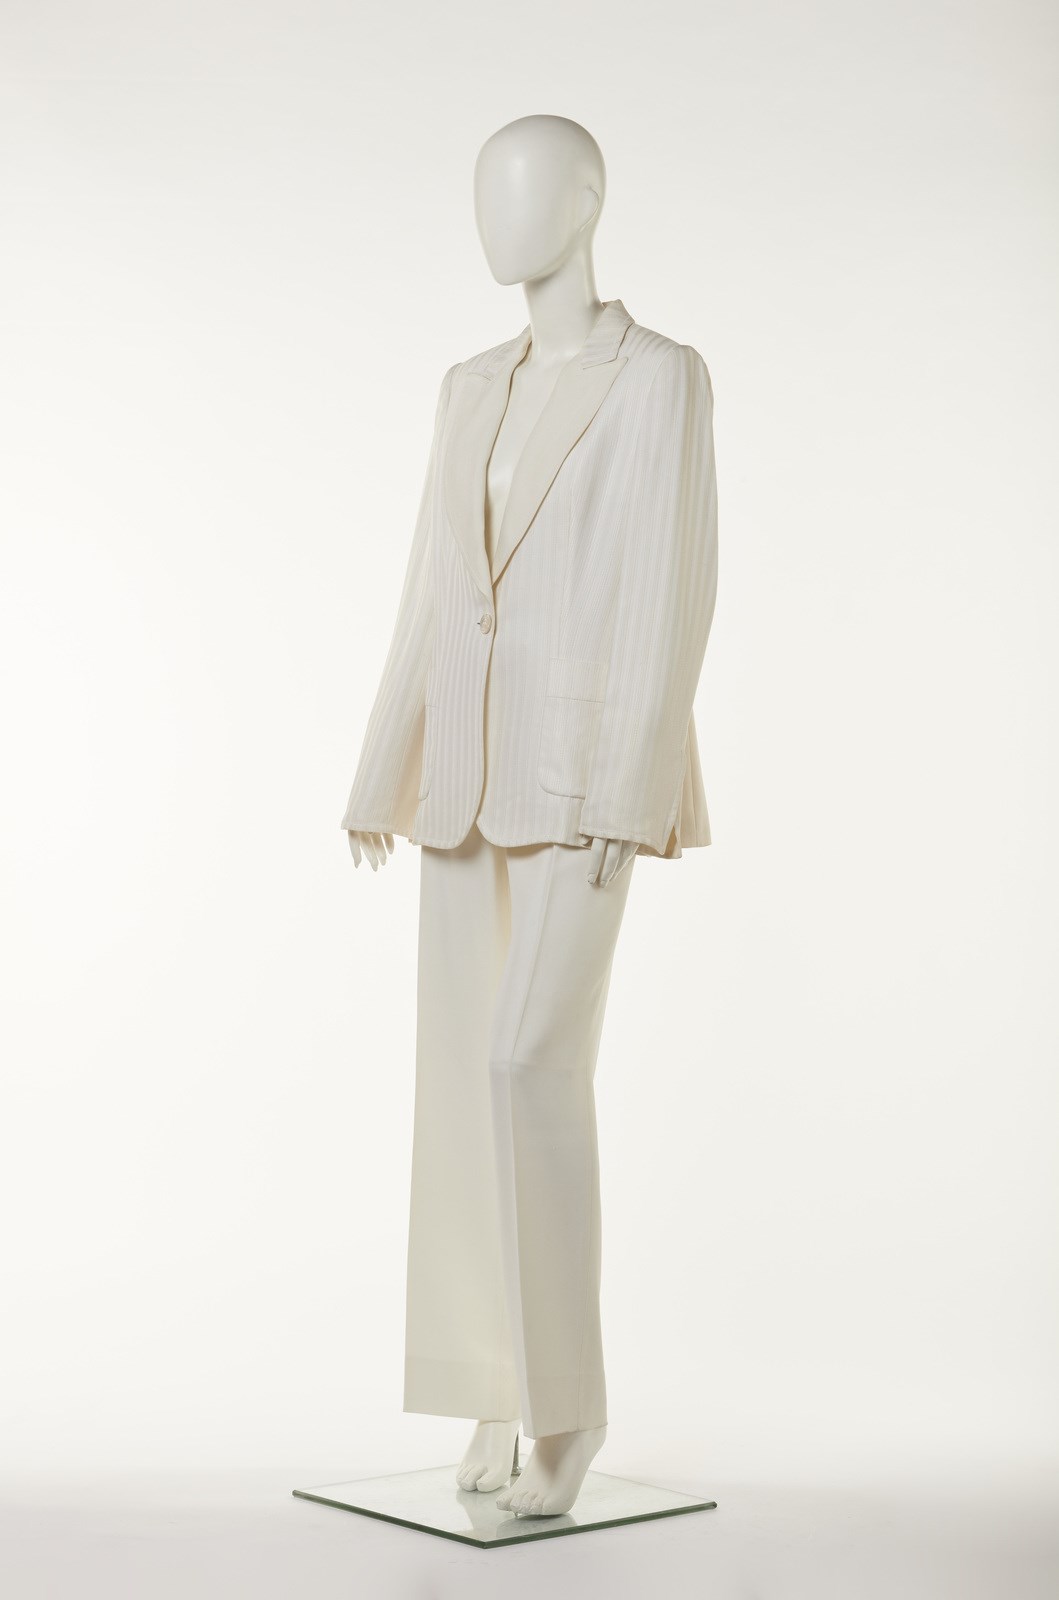 Tailleur bianco, giacca e pantalone. (Gianfranco Ferre')